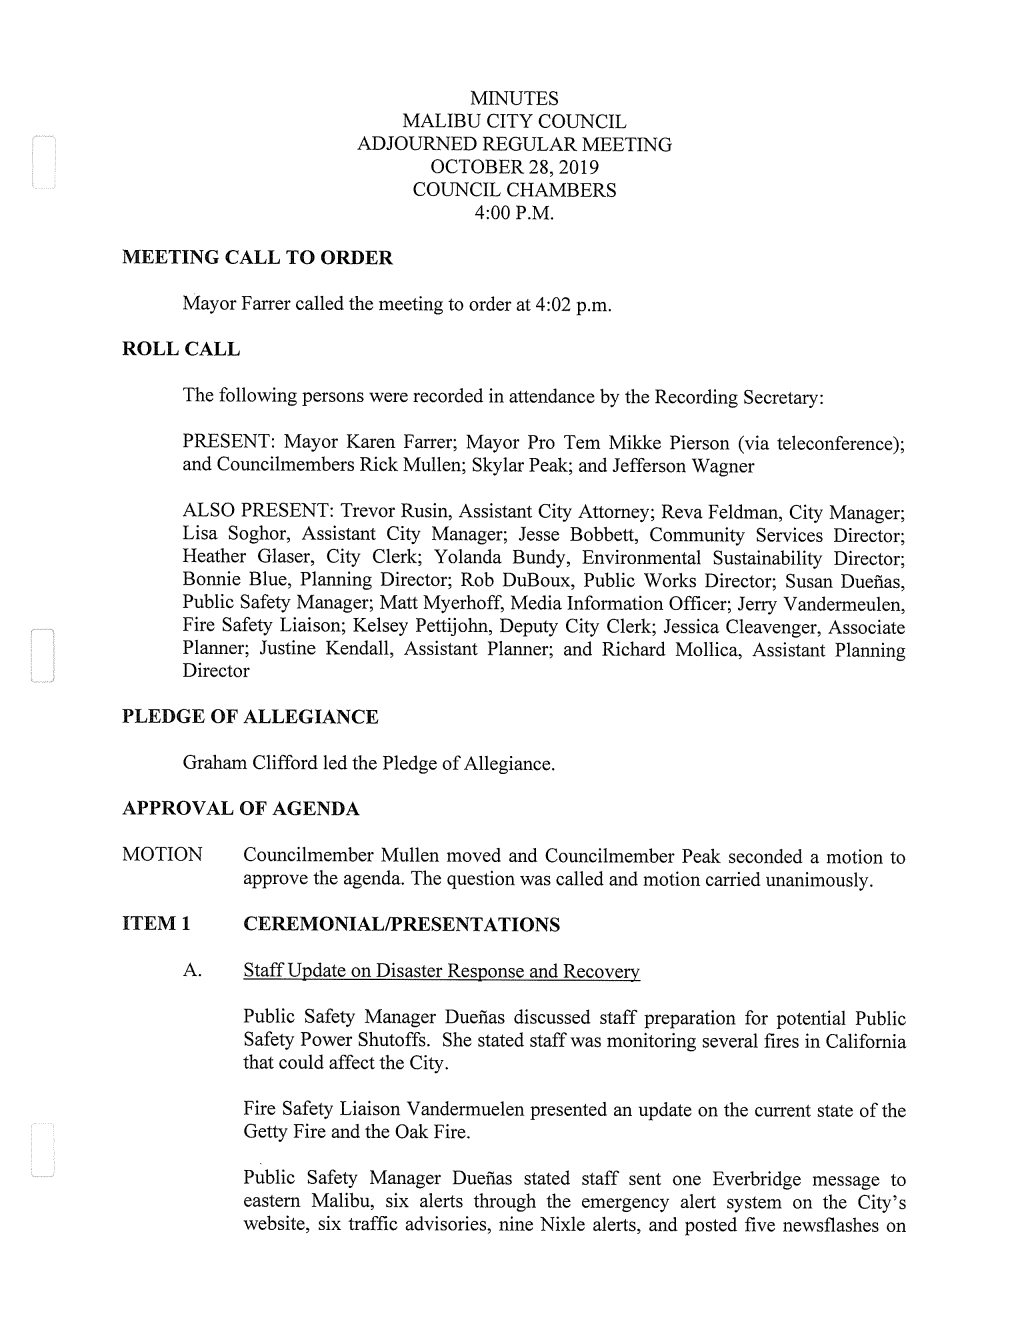 Minutes Malibu City Council Adjourned Regular Meeting October 28, 2019 Council Chambers 4:00 P.M